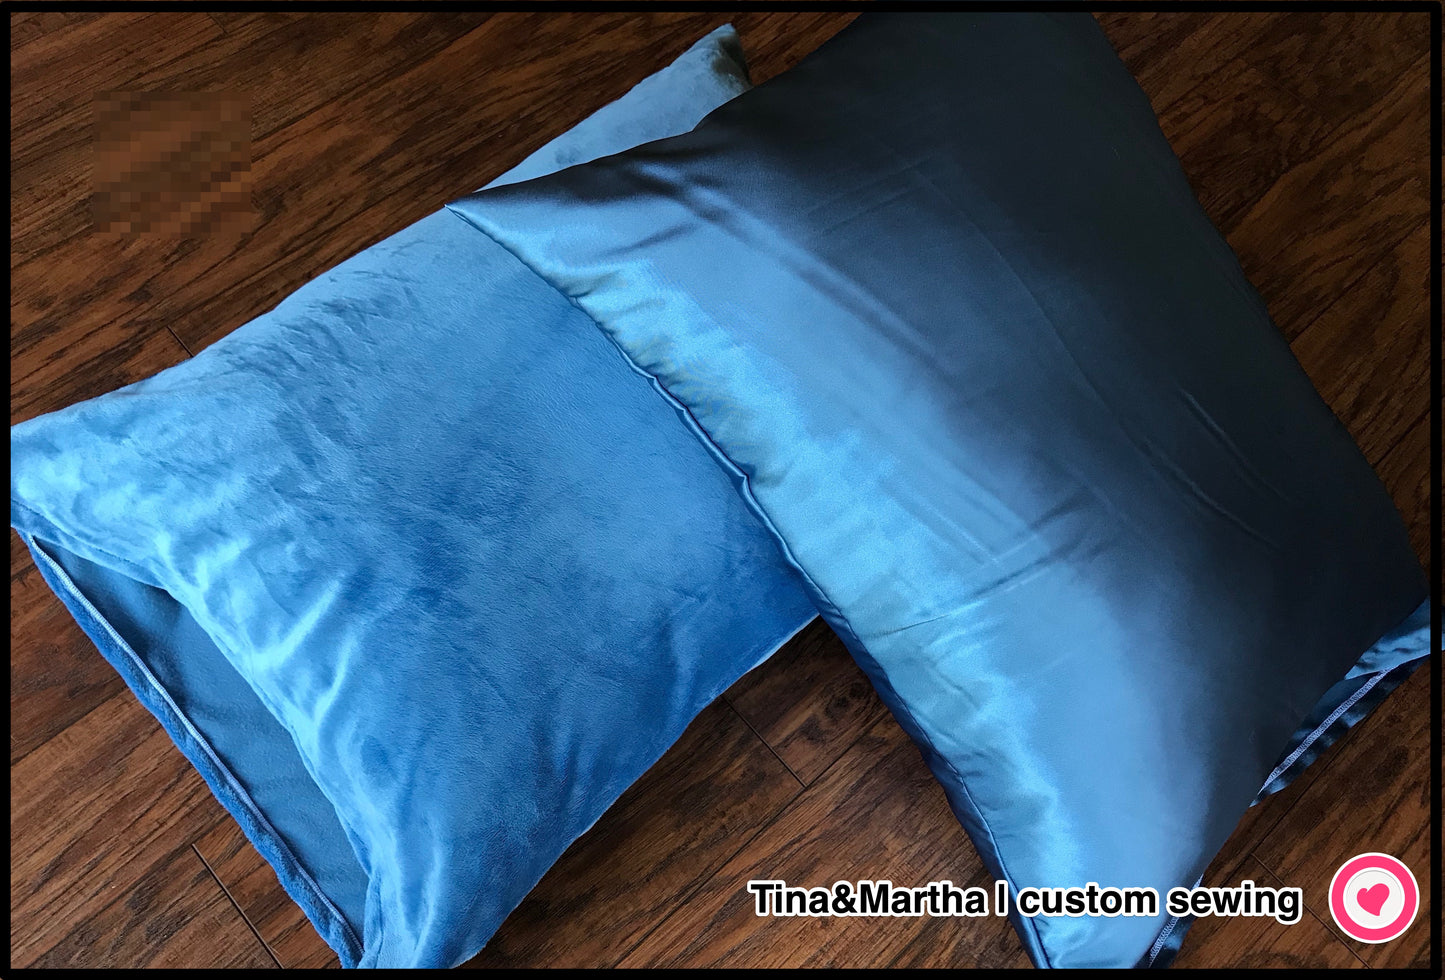 Bluebell minky pillowcase